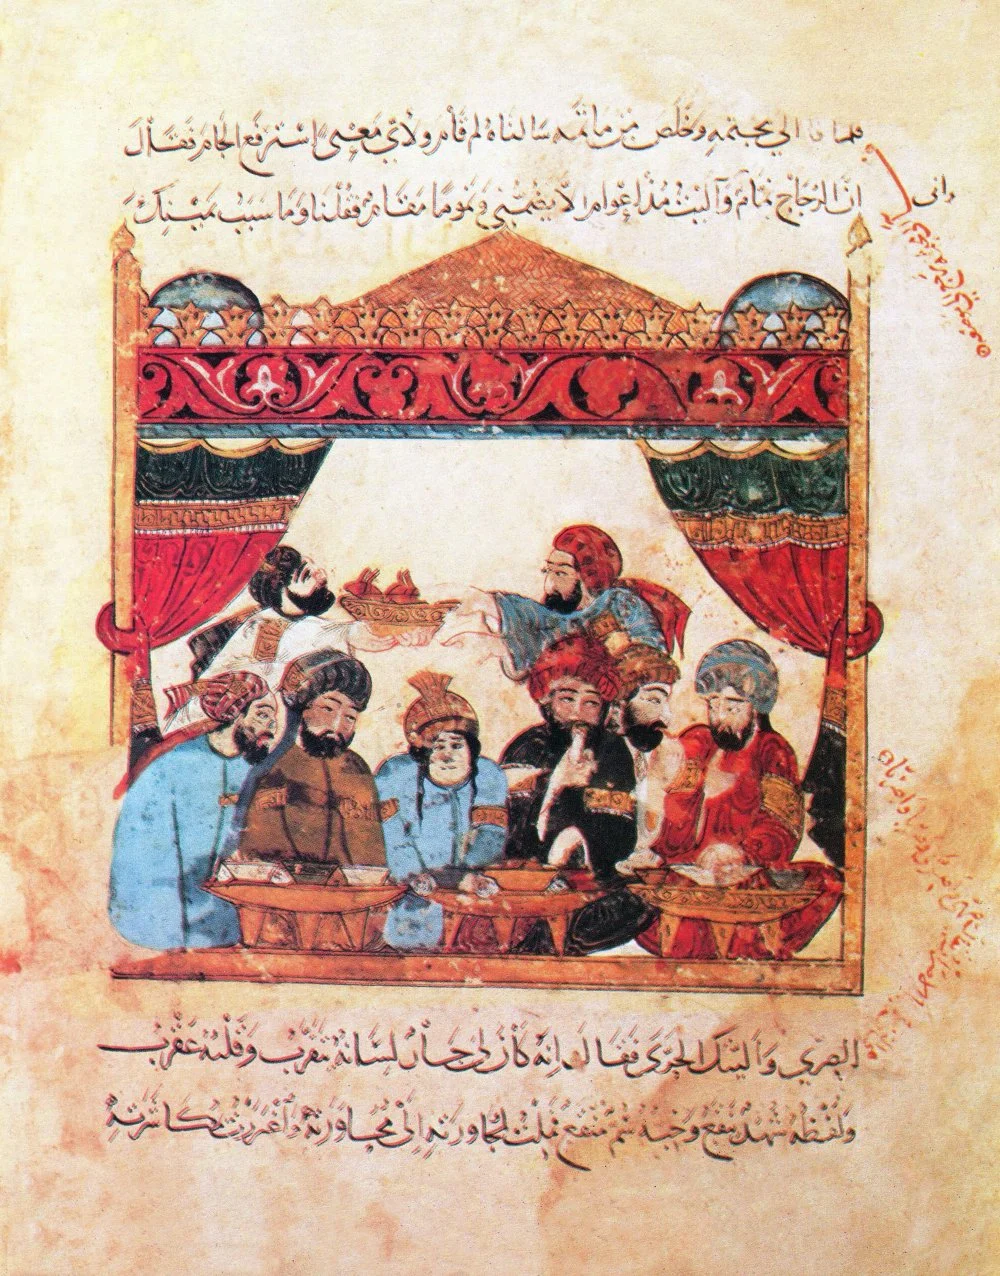 A feast. Miniature painting by Yahya ibn Mahmud al-Wasiti, 1237 CE./Alamy